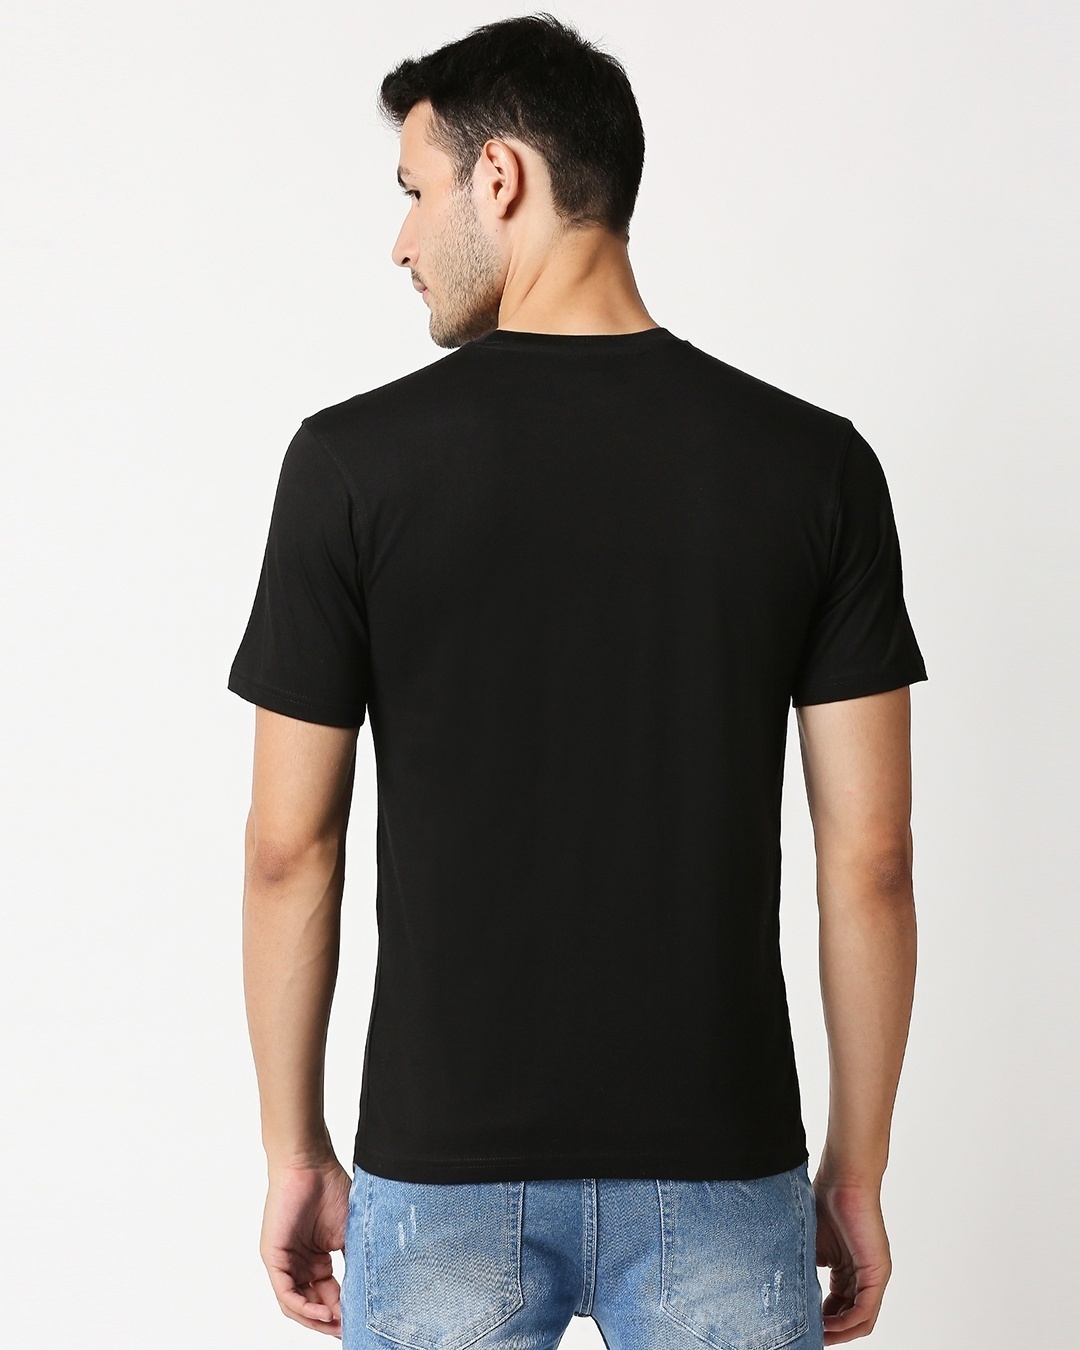 Shop Men's Black Lockdown Goals Cotton T-shirt-Design